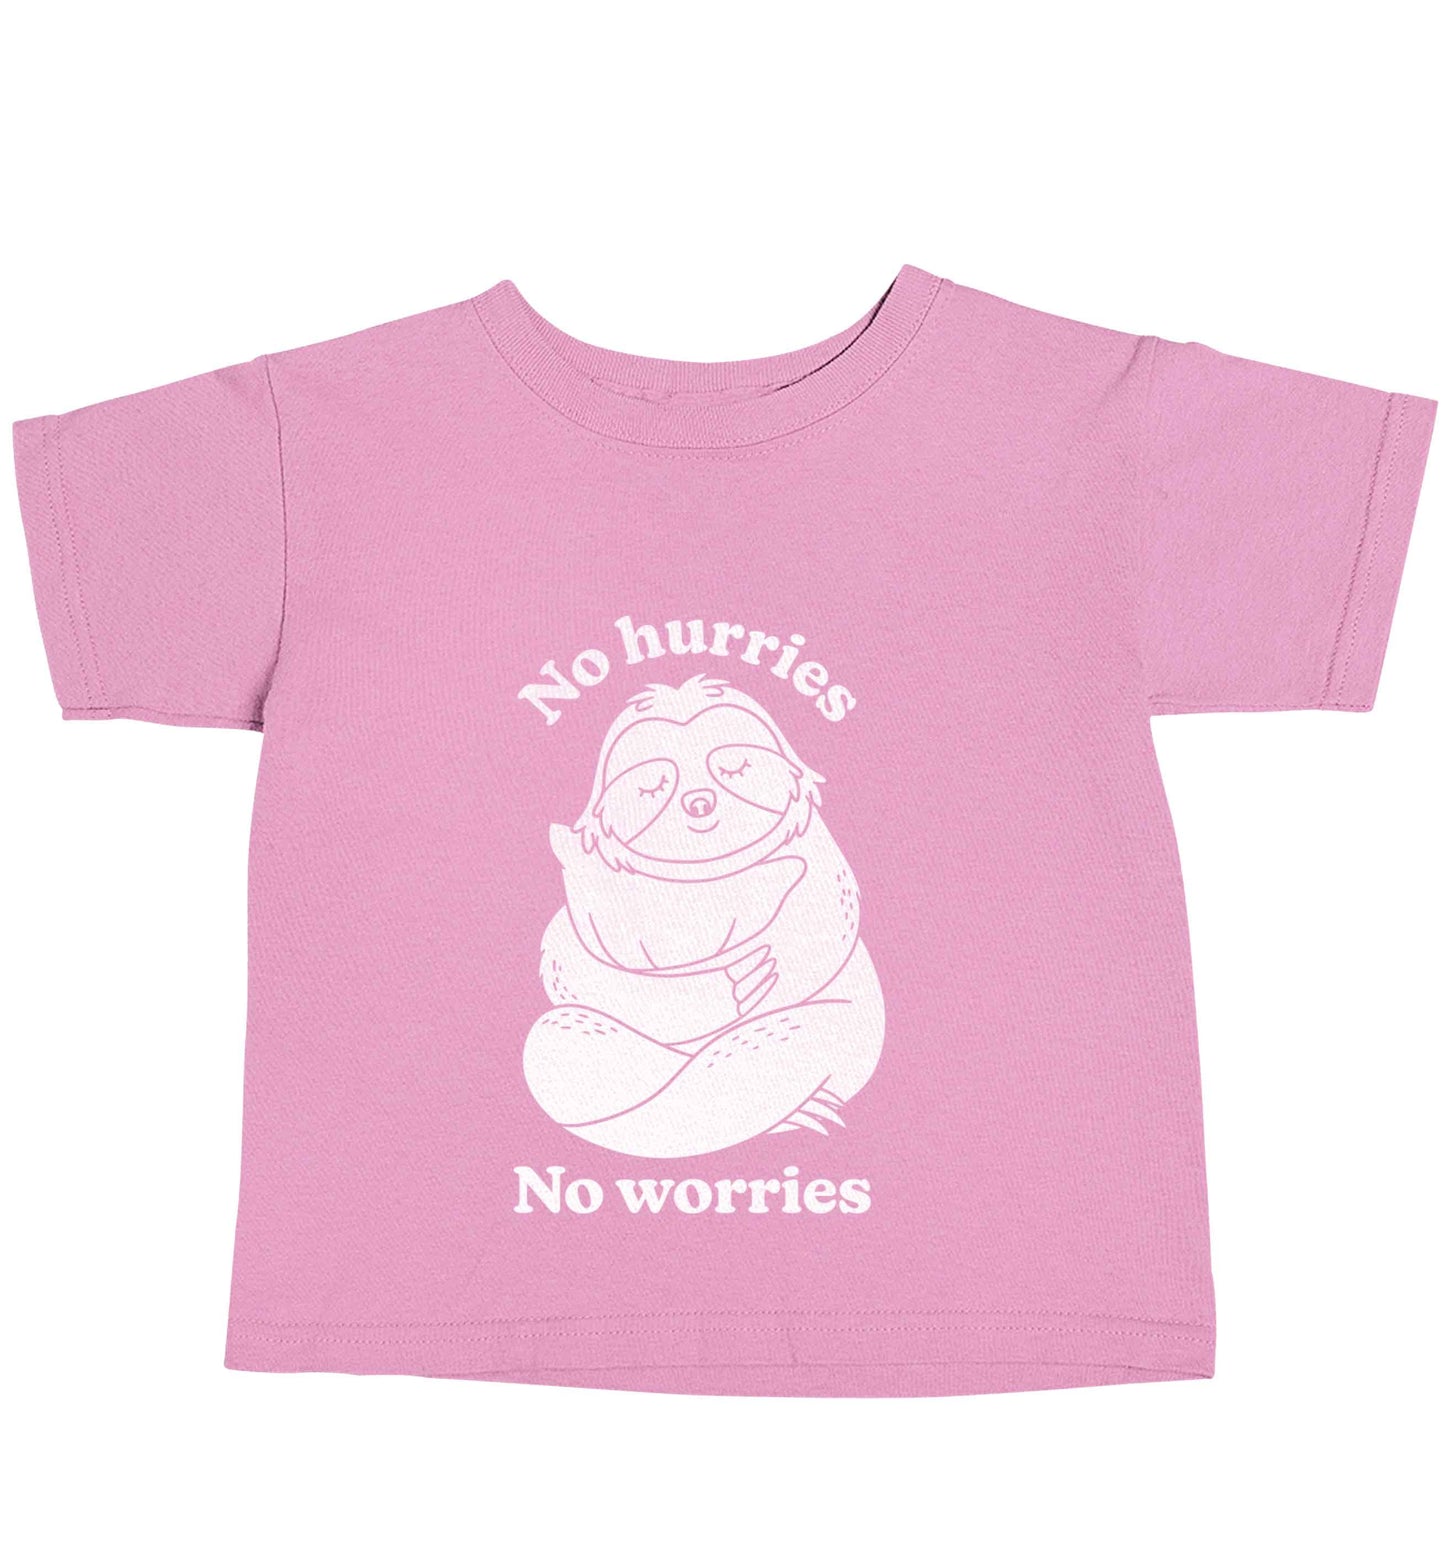 No hurries no worries light pink baby toddler Tshirt 2 Years